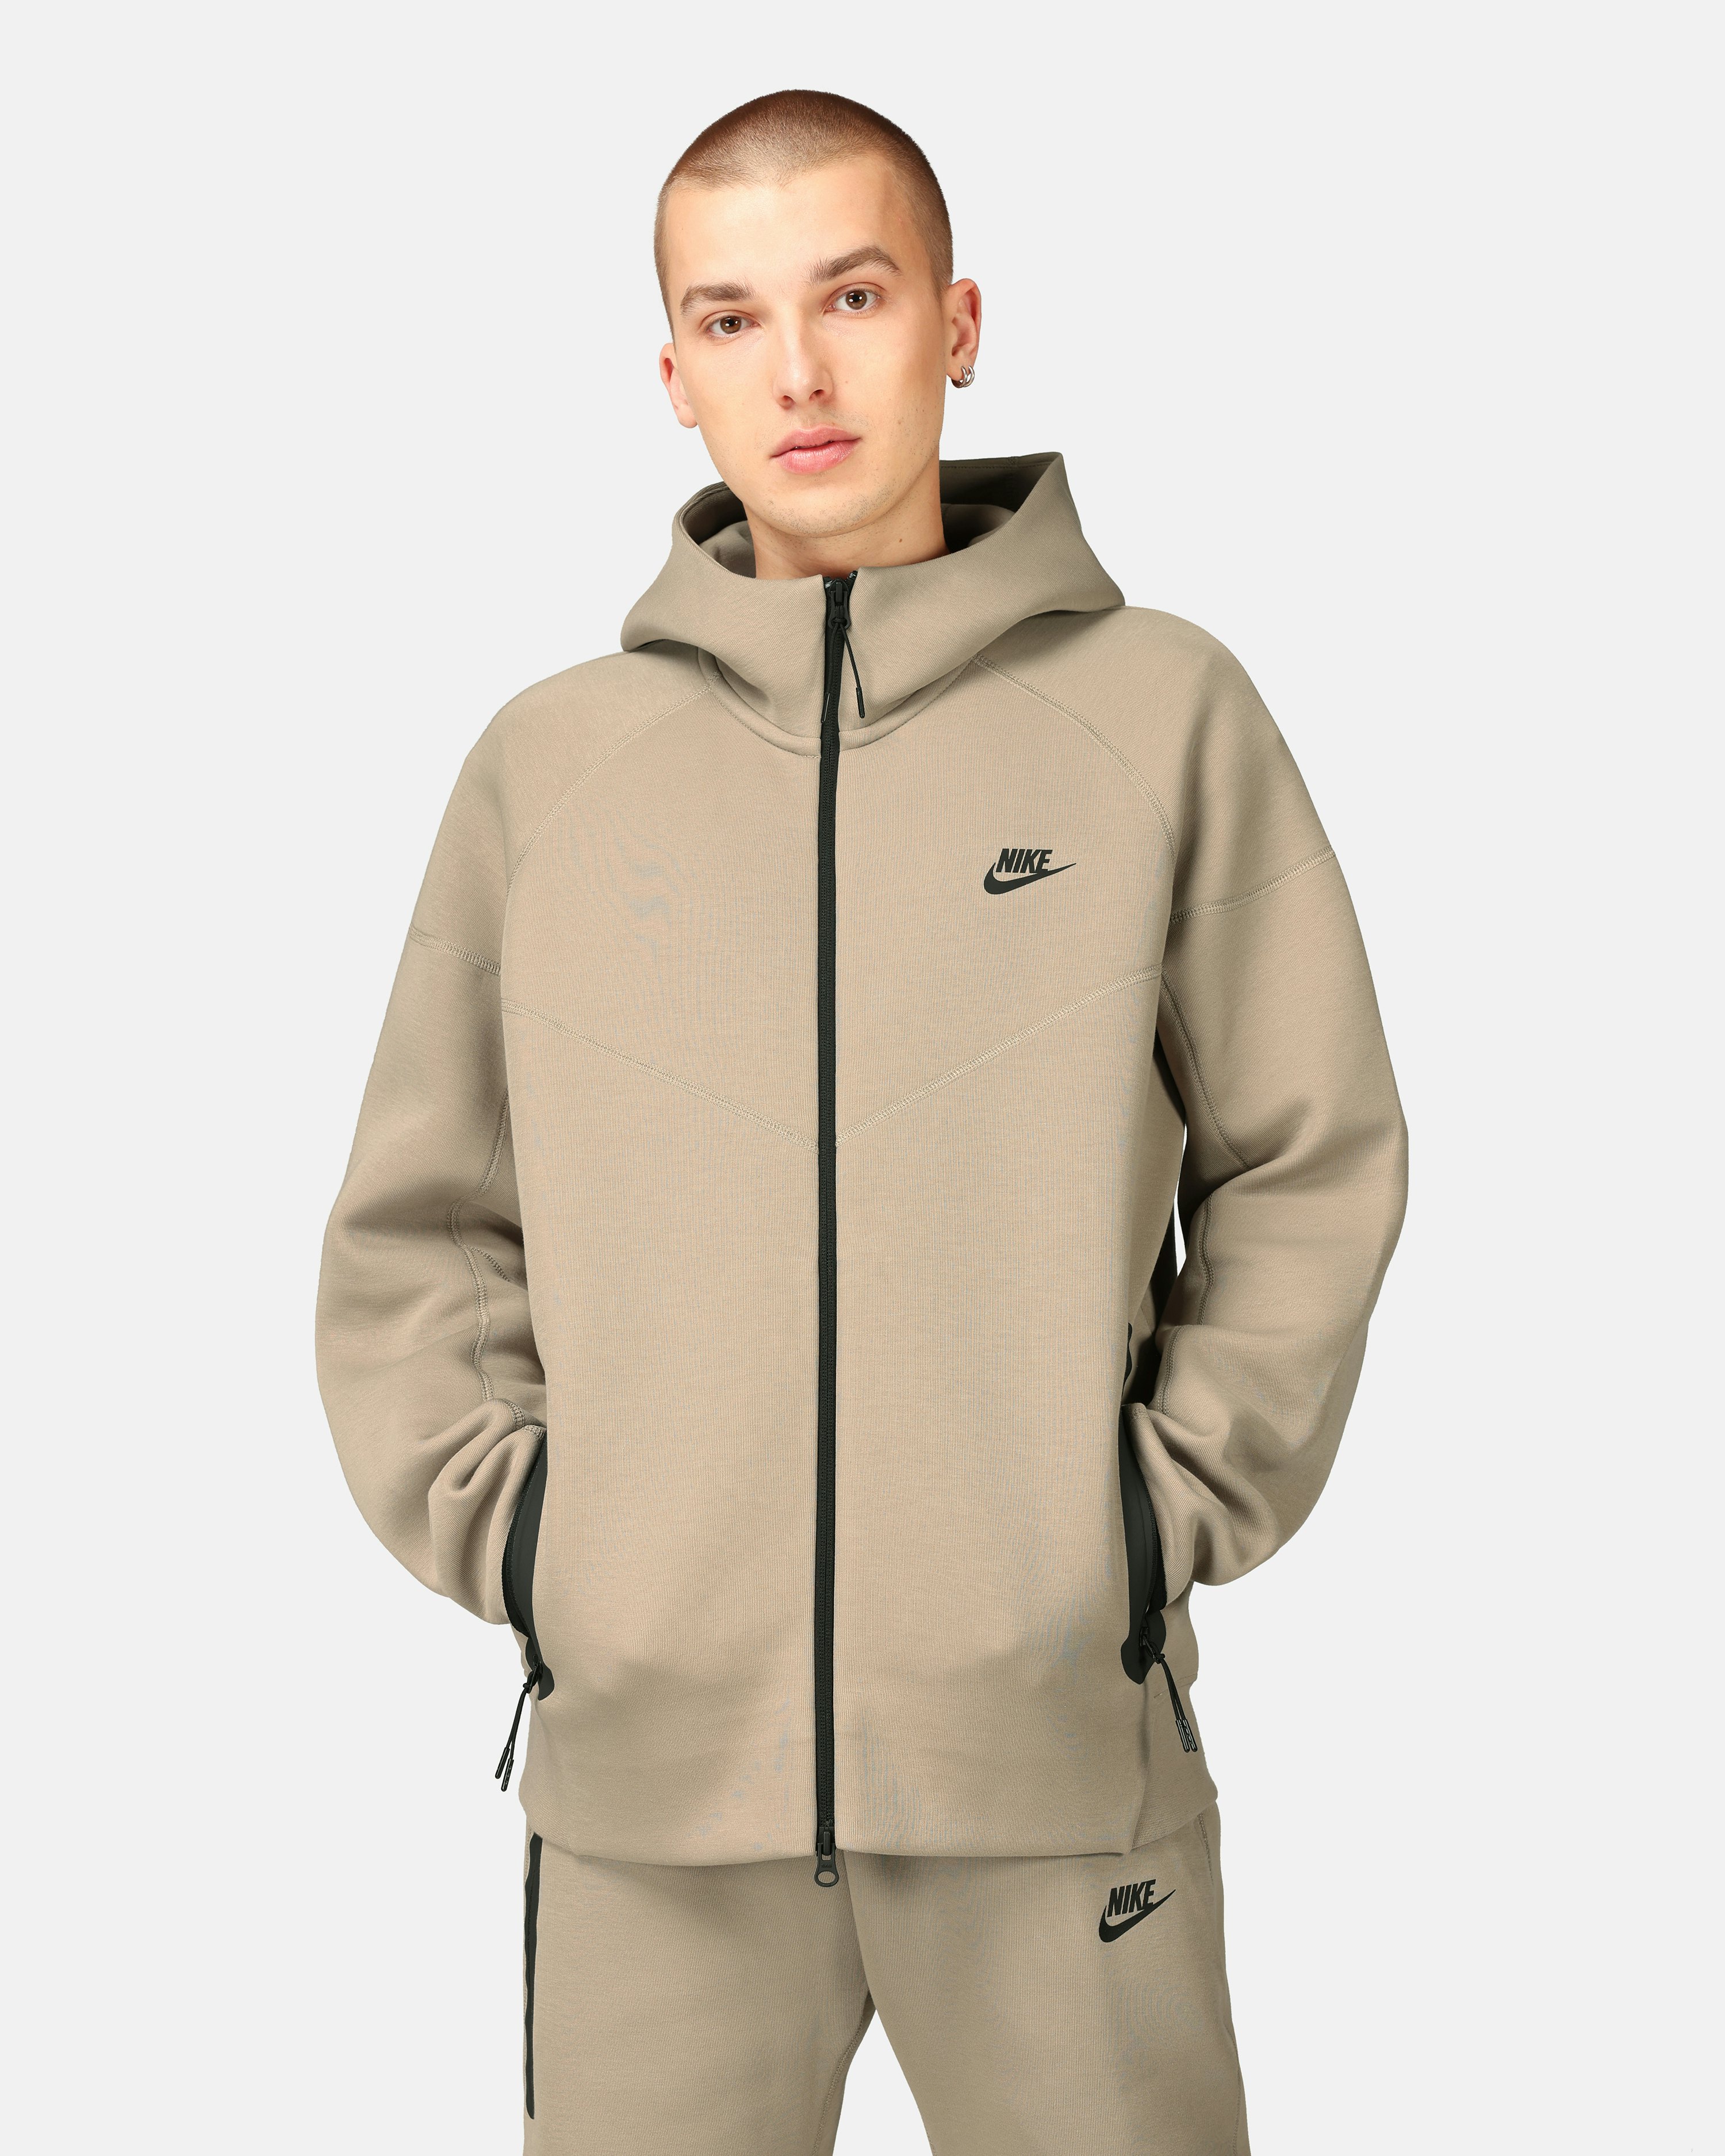 Nike Tech Fleece Jacket Khaki brown | Unisex | Junkyard